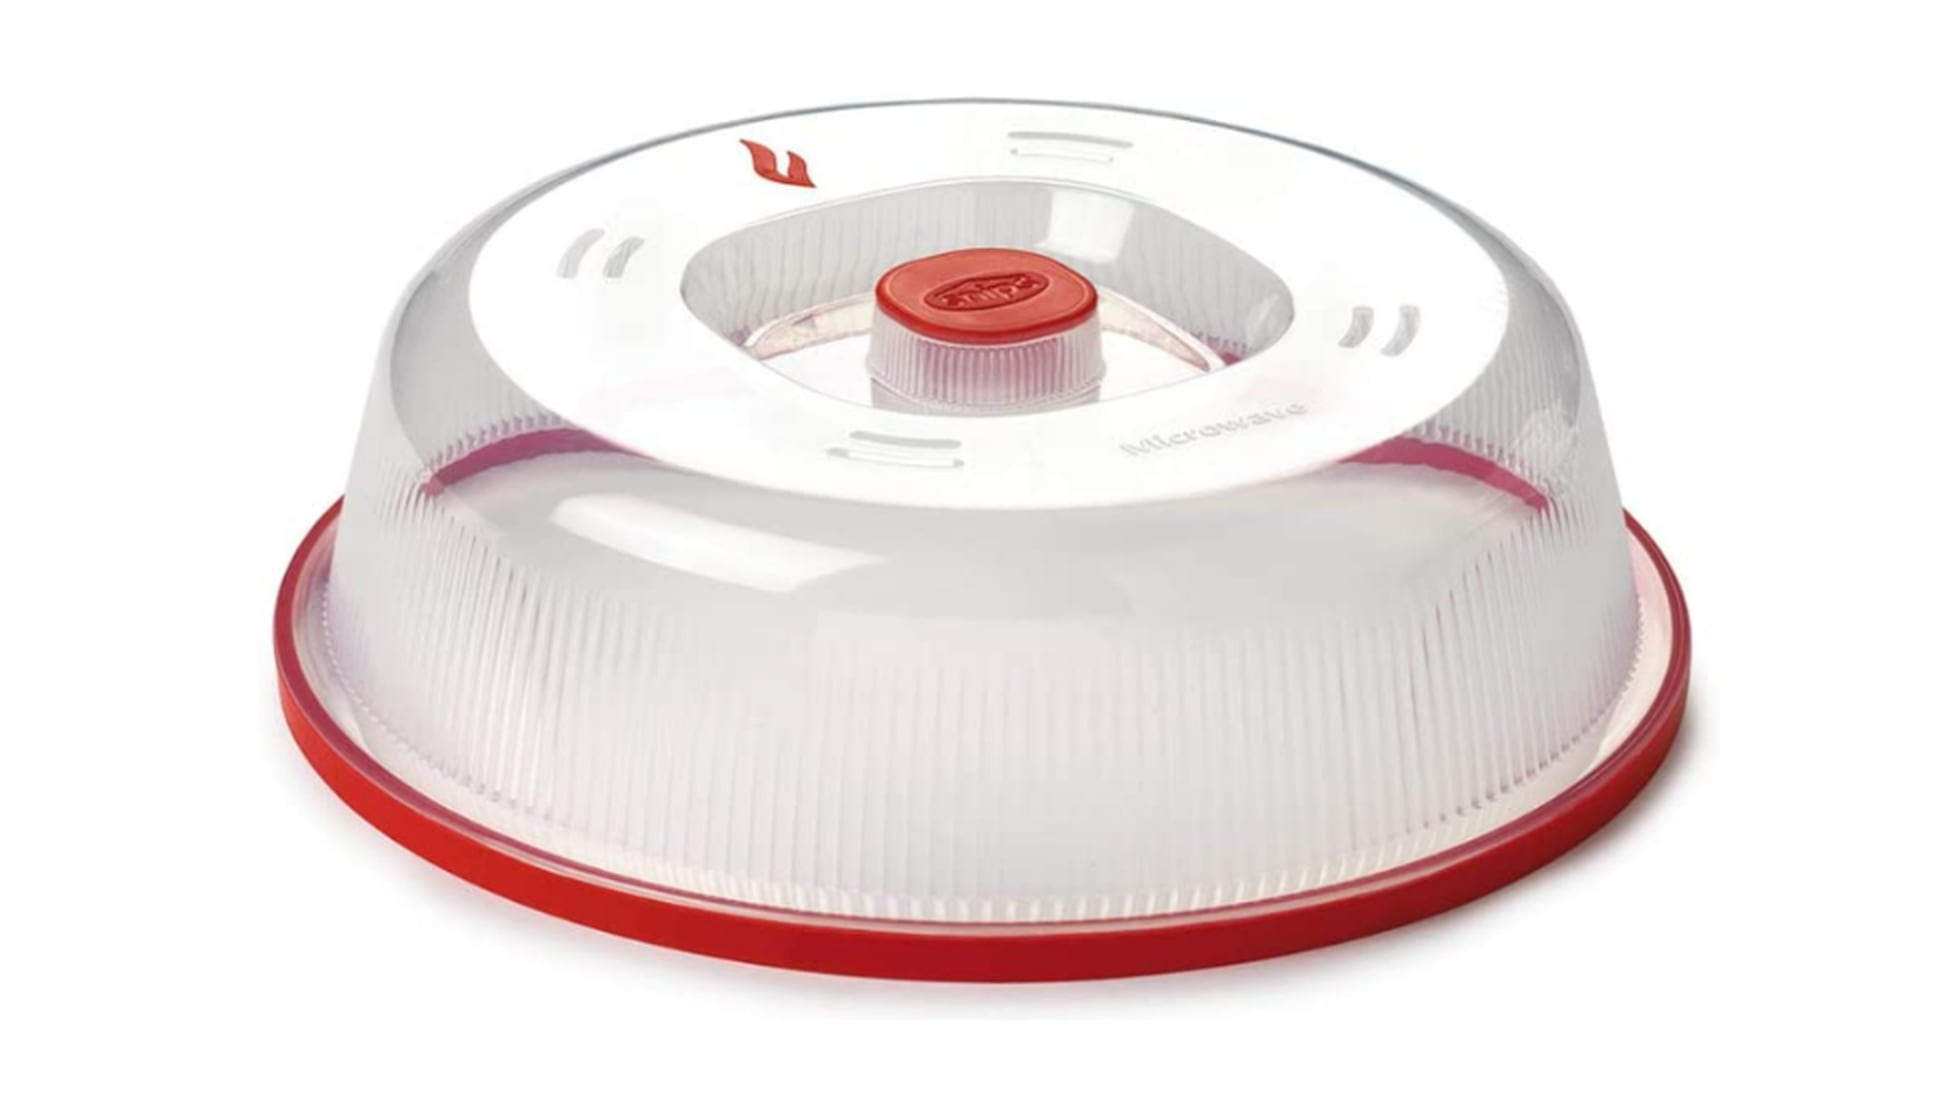 cubierta para microondas sin BPA diámetro 26,5 cm altura 10,5 cm Tapa para microondas con asa tapa transparente 